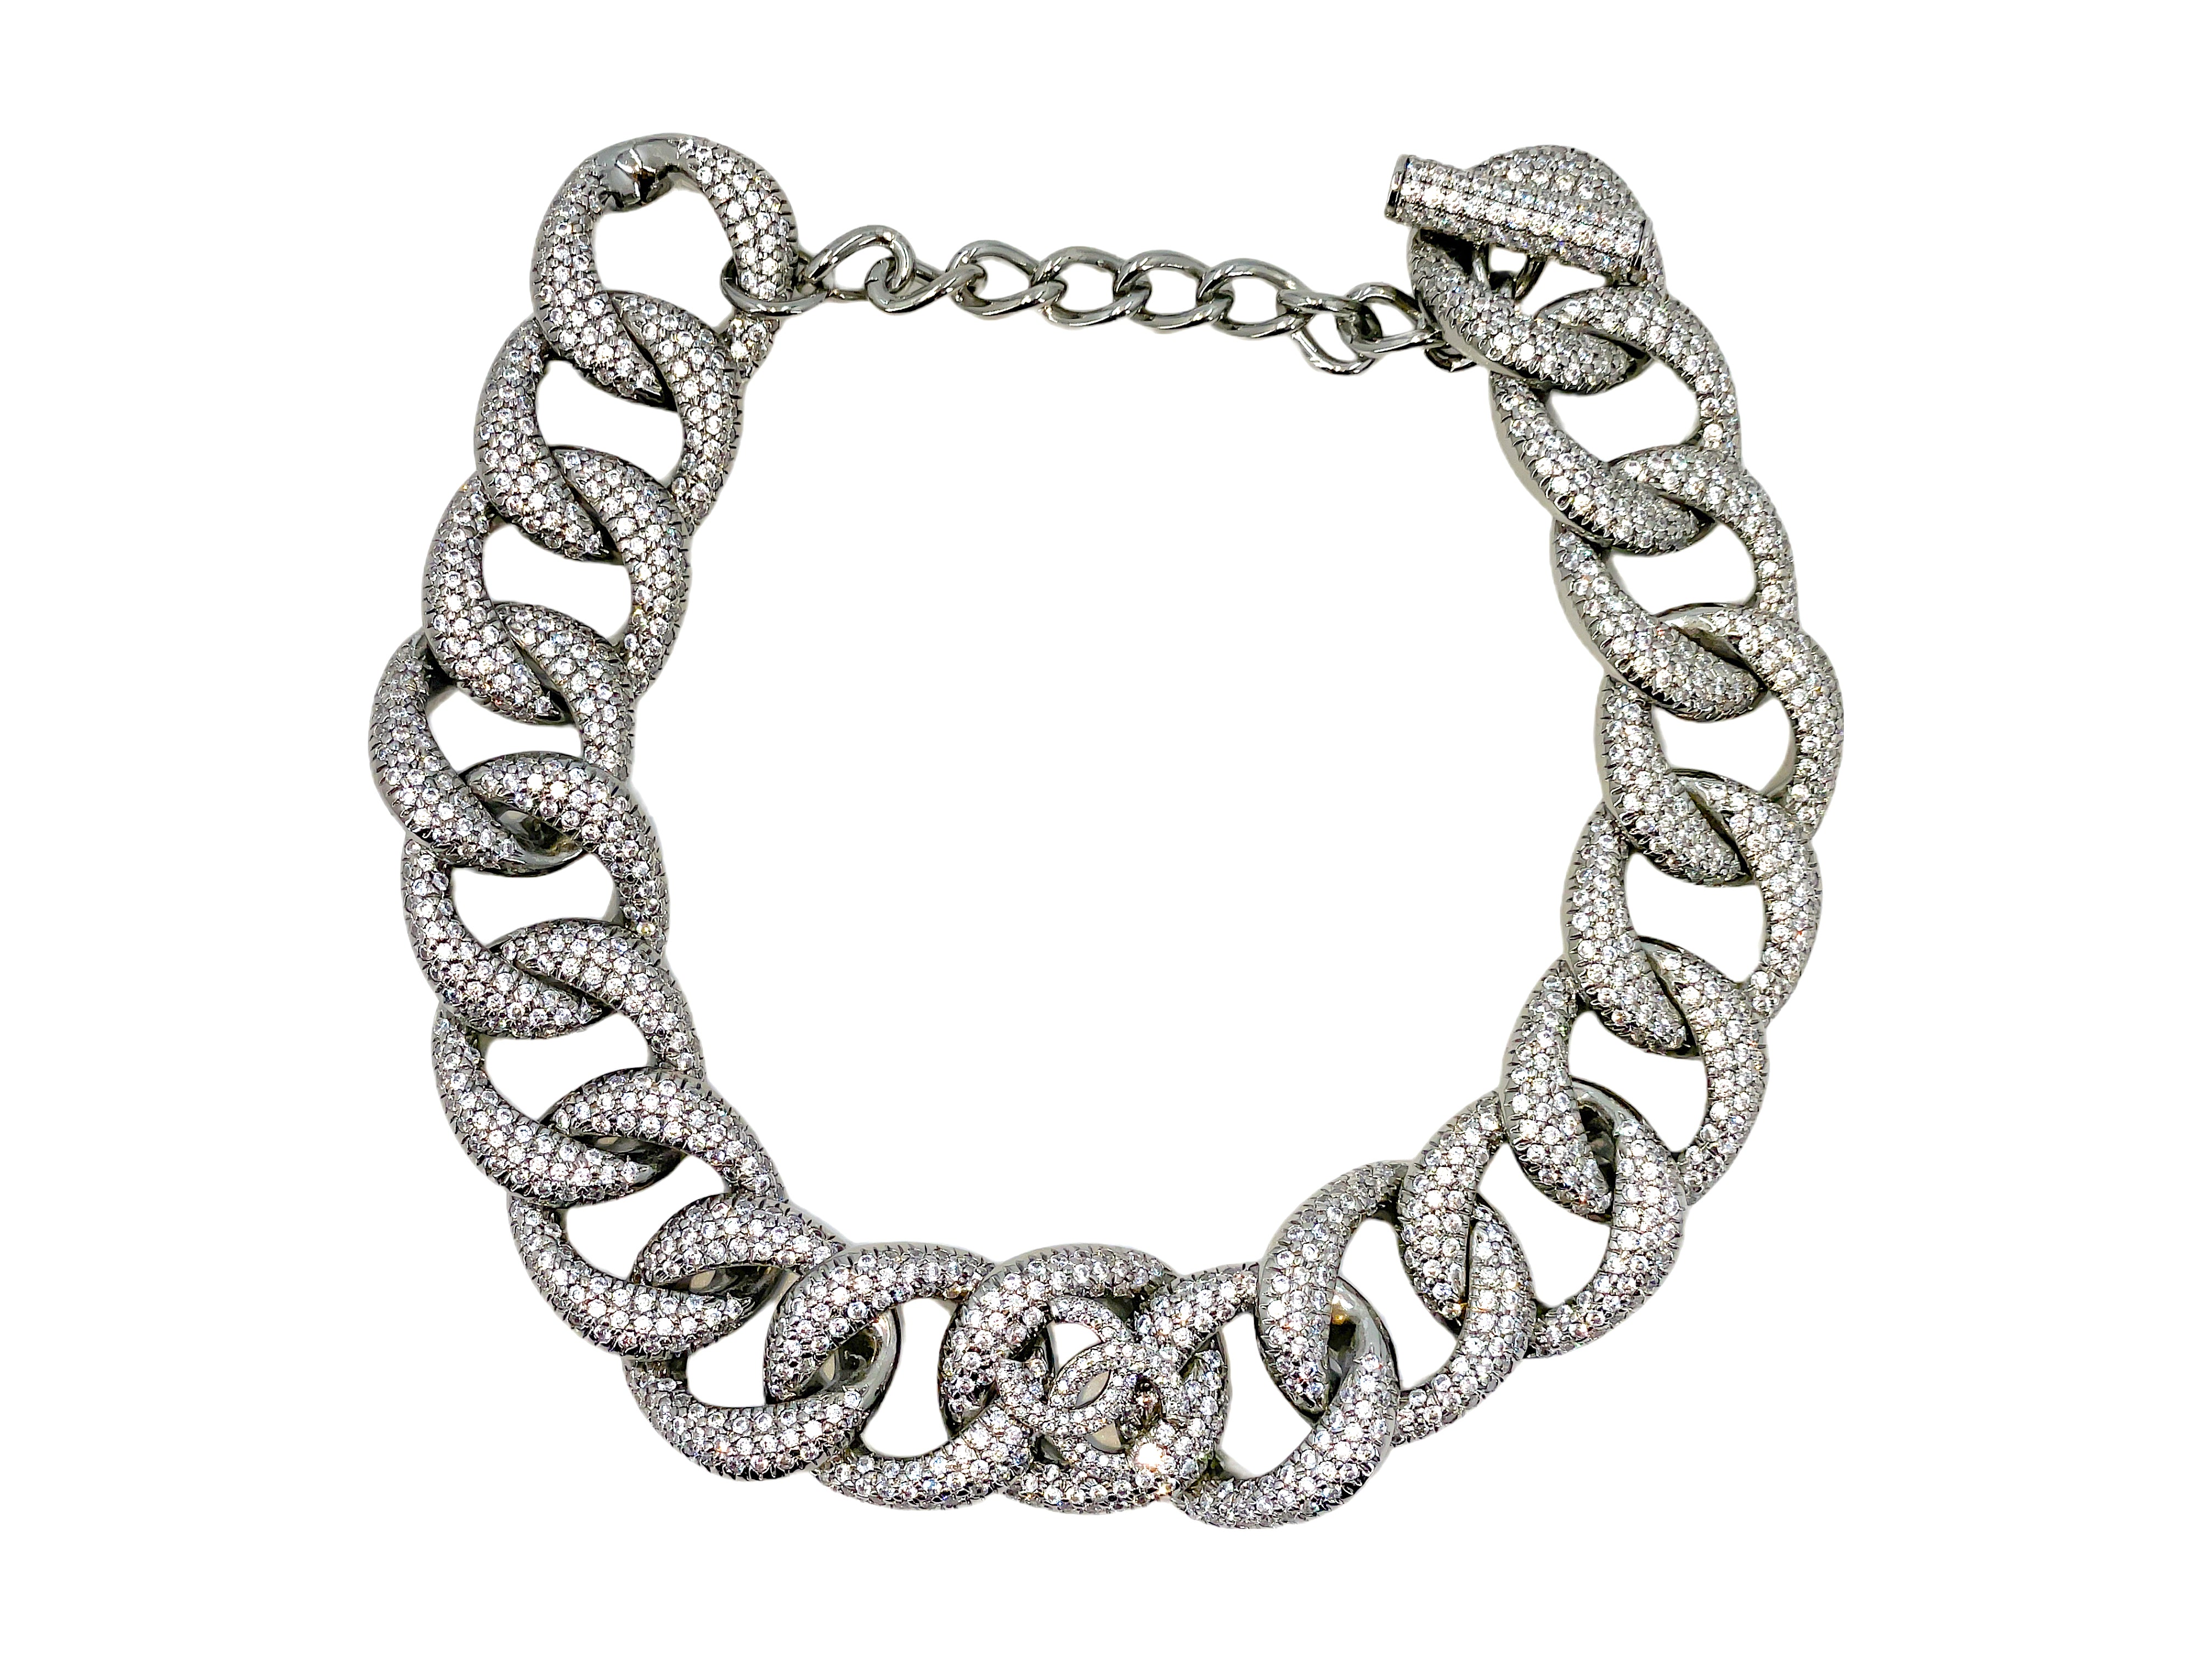 chanel necklace cc logo silver